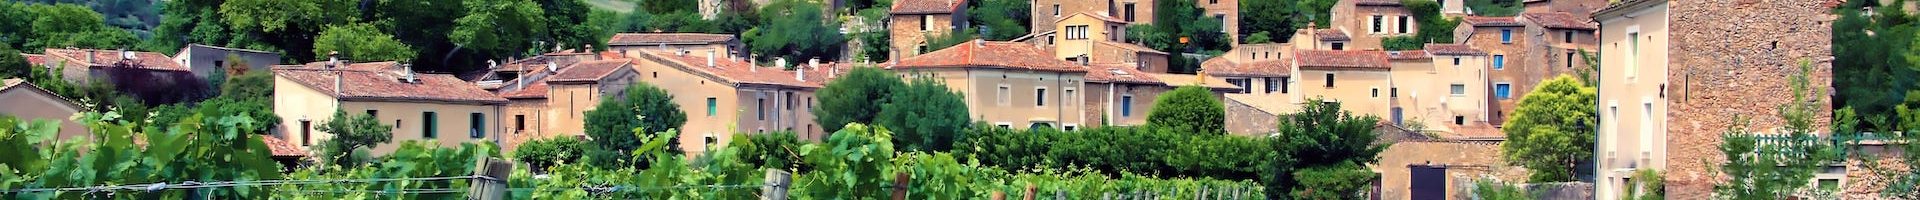 Languedoc-wine-vineyard_1123768688